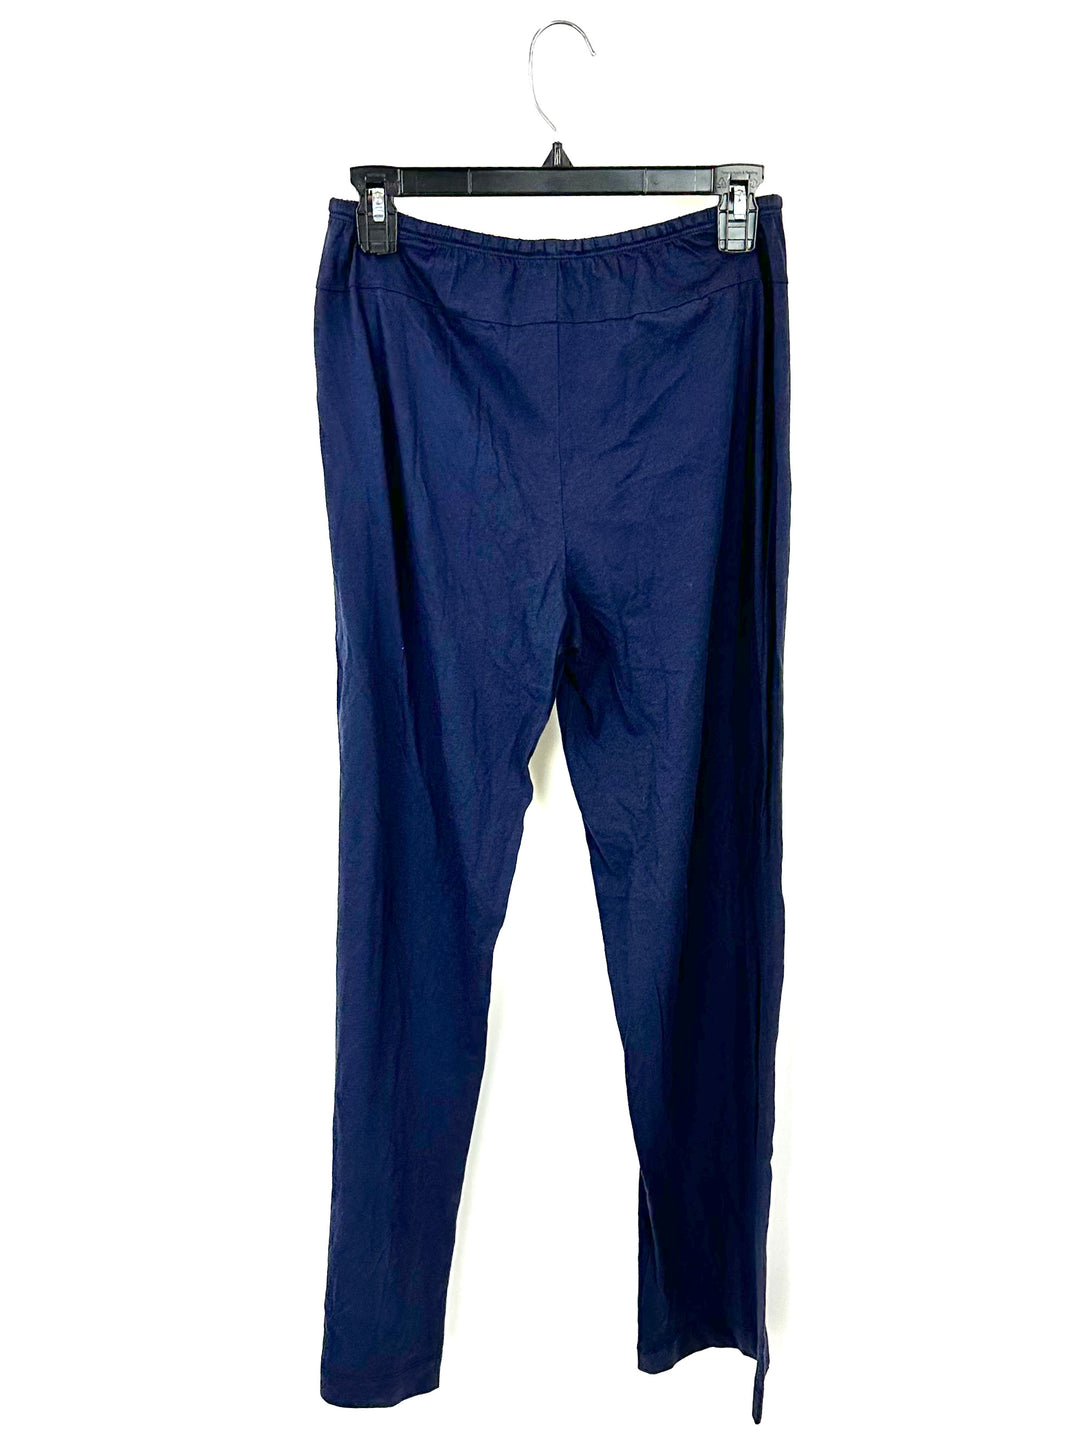 Navy Blue Sleepwear Pants - Small